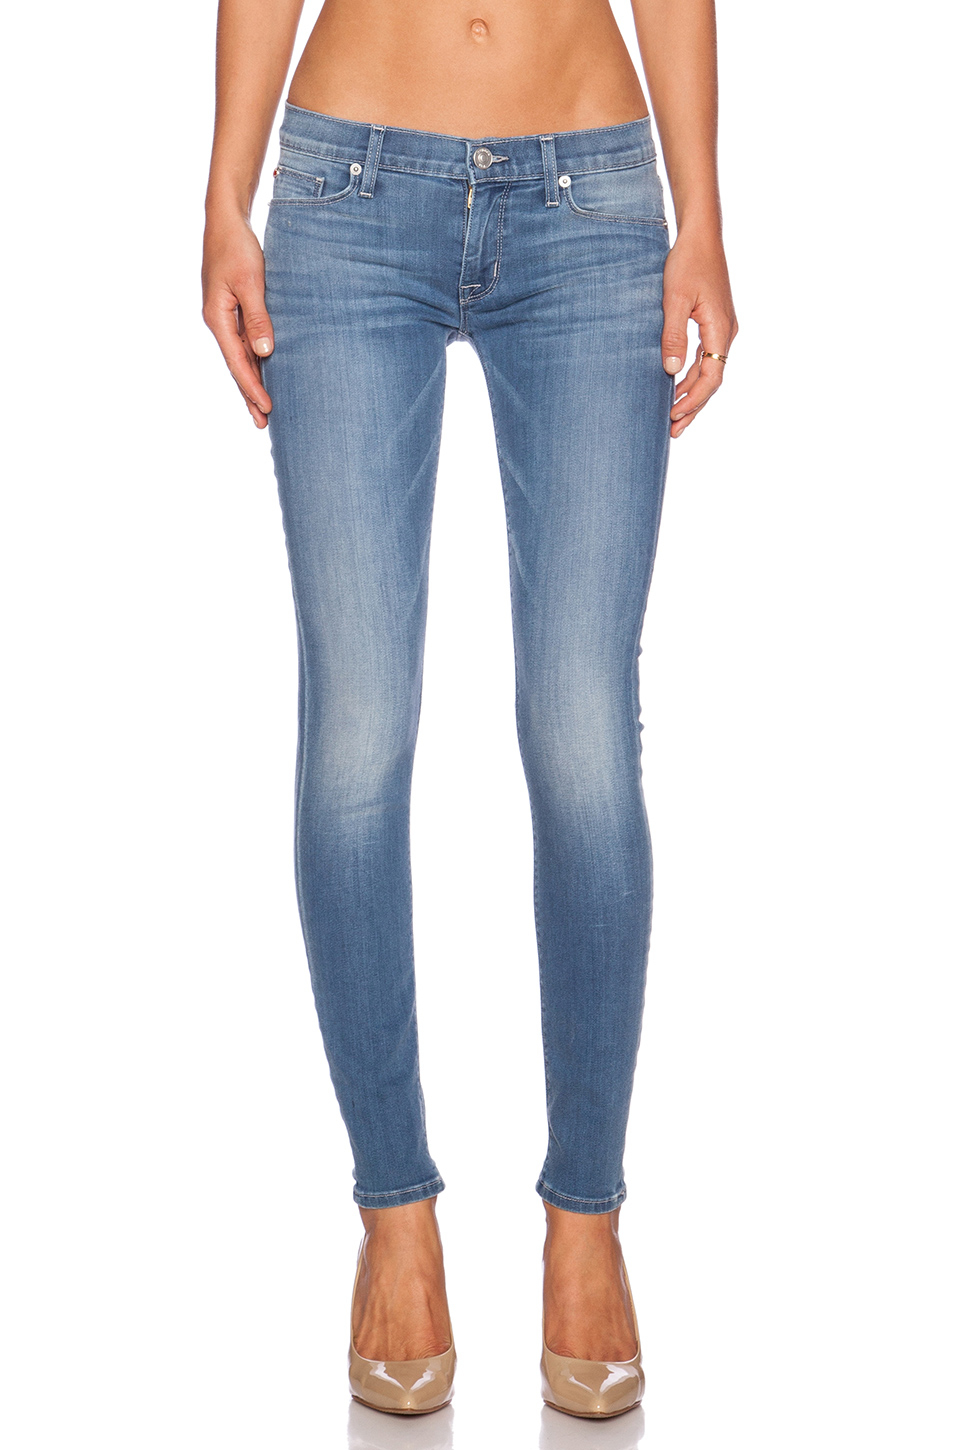 Lyst - Hudson Jeans Krista Super Skinny Jeans in Blue